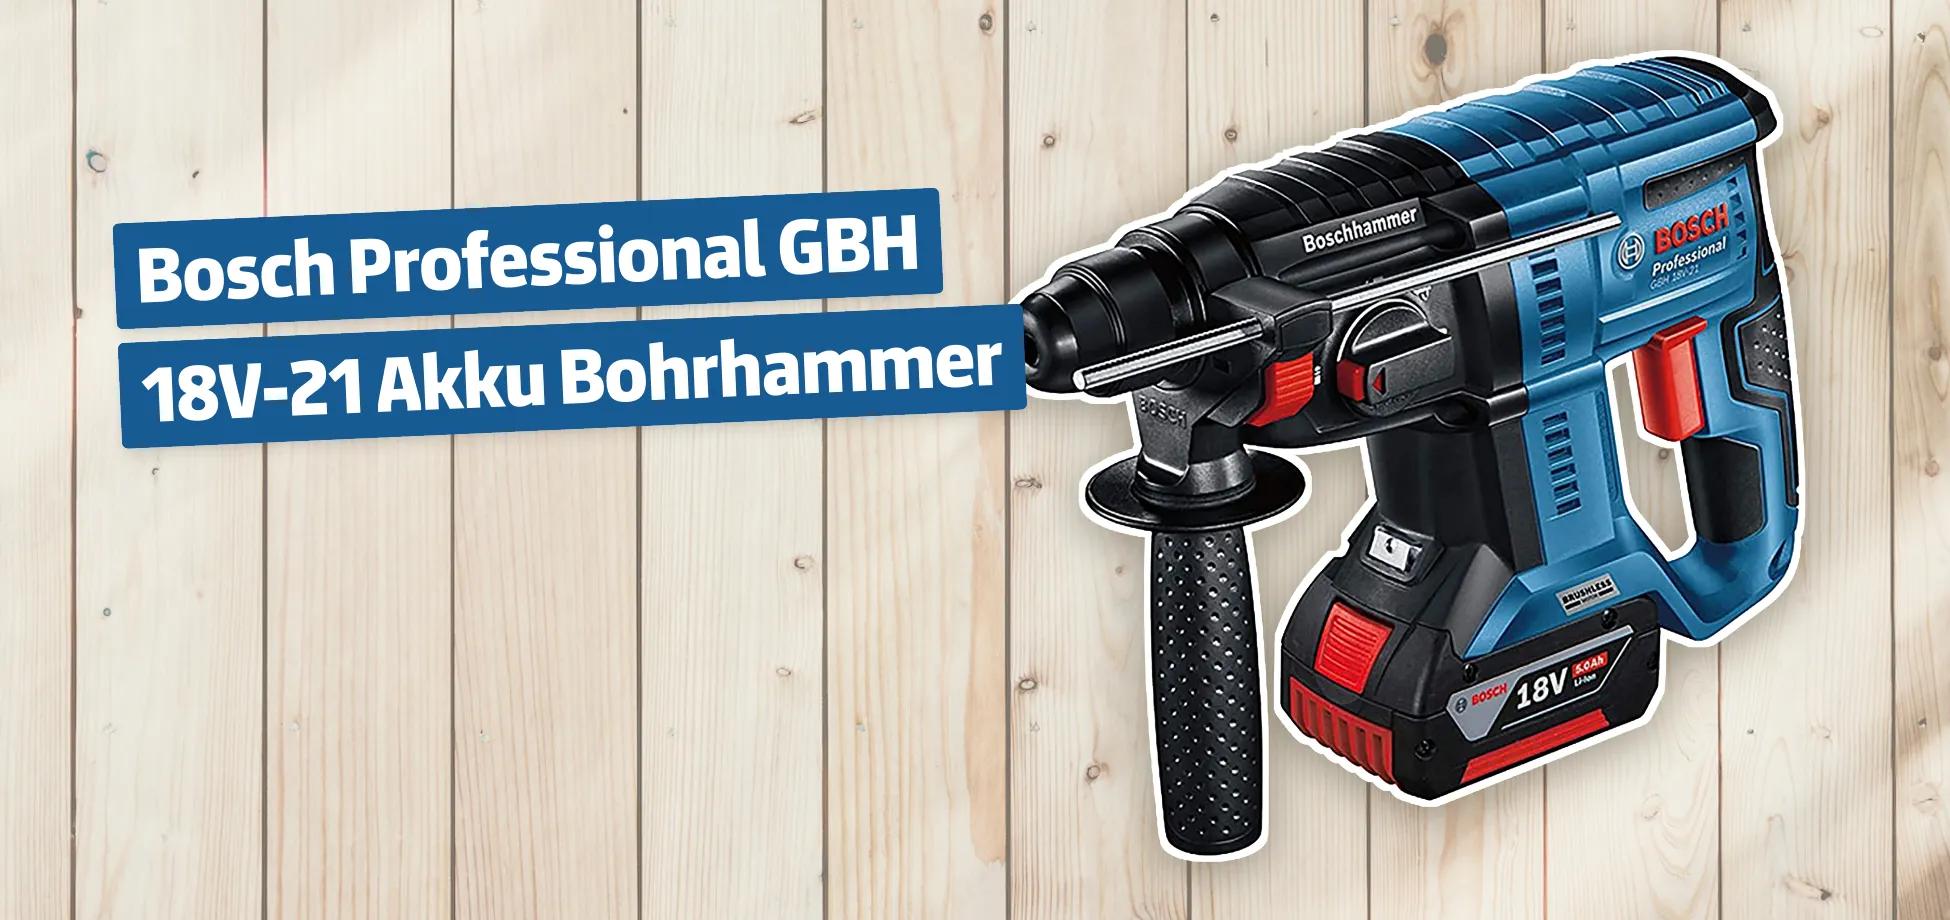 Bosch Professional GBH 18V-21 Akku Bohrhammer